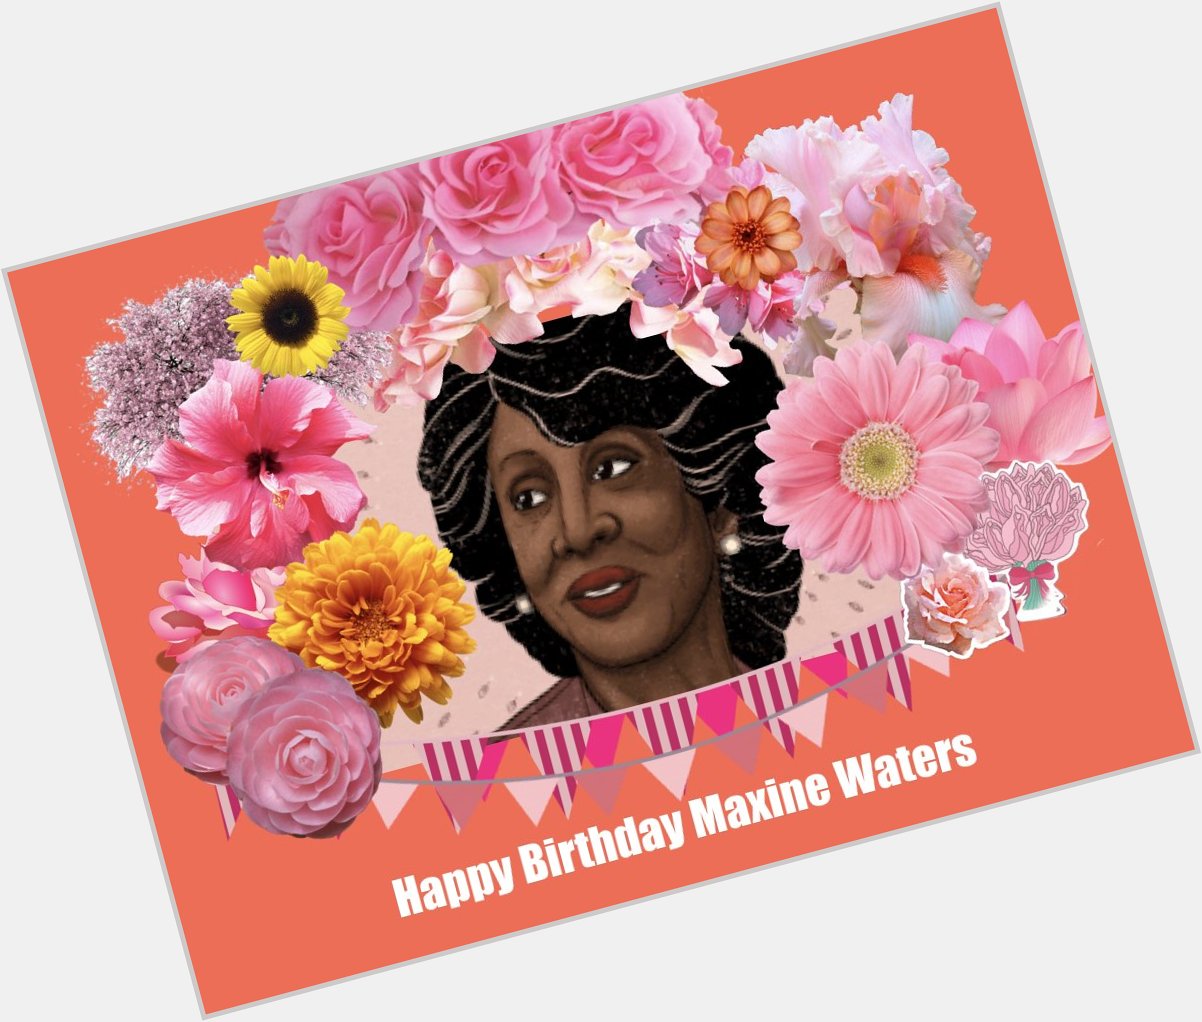 Happy Birthday Maxine Waters! 